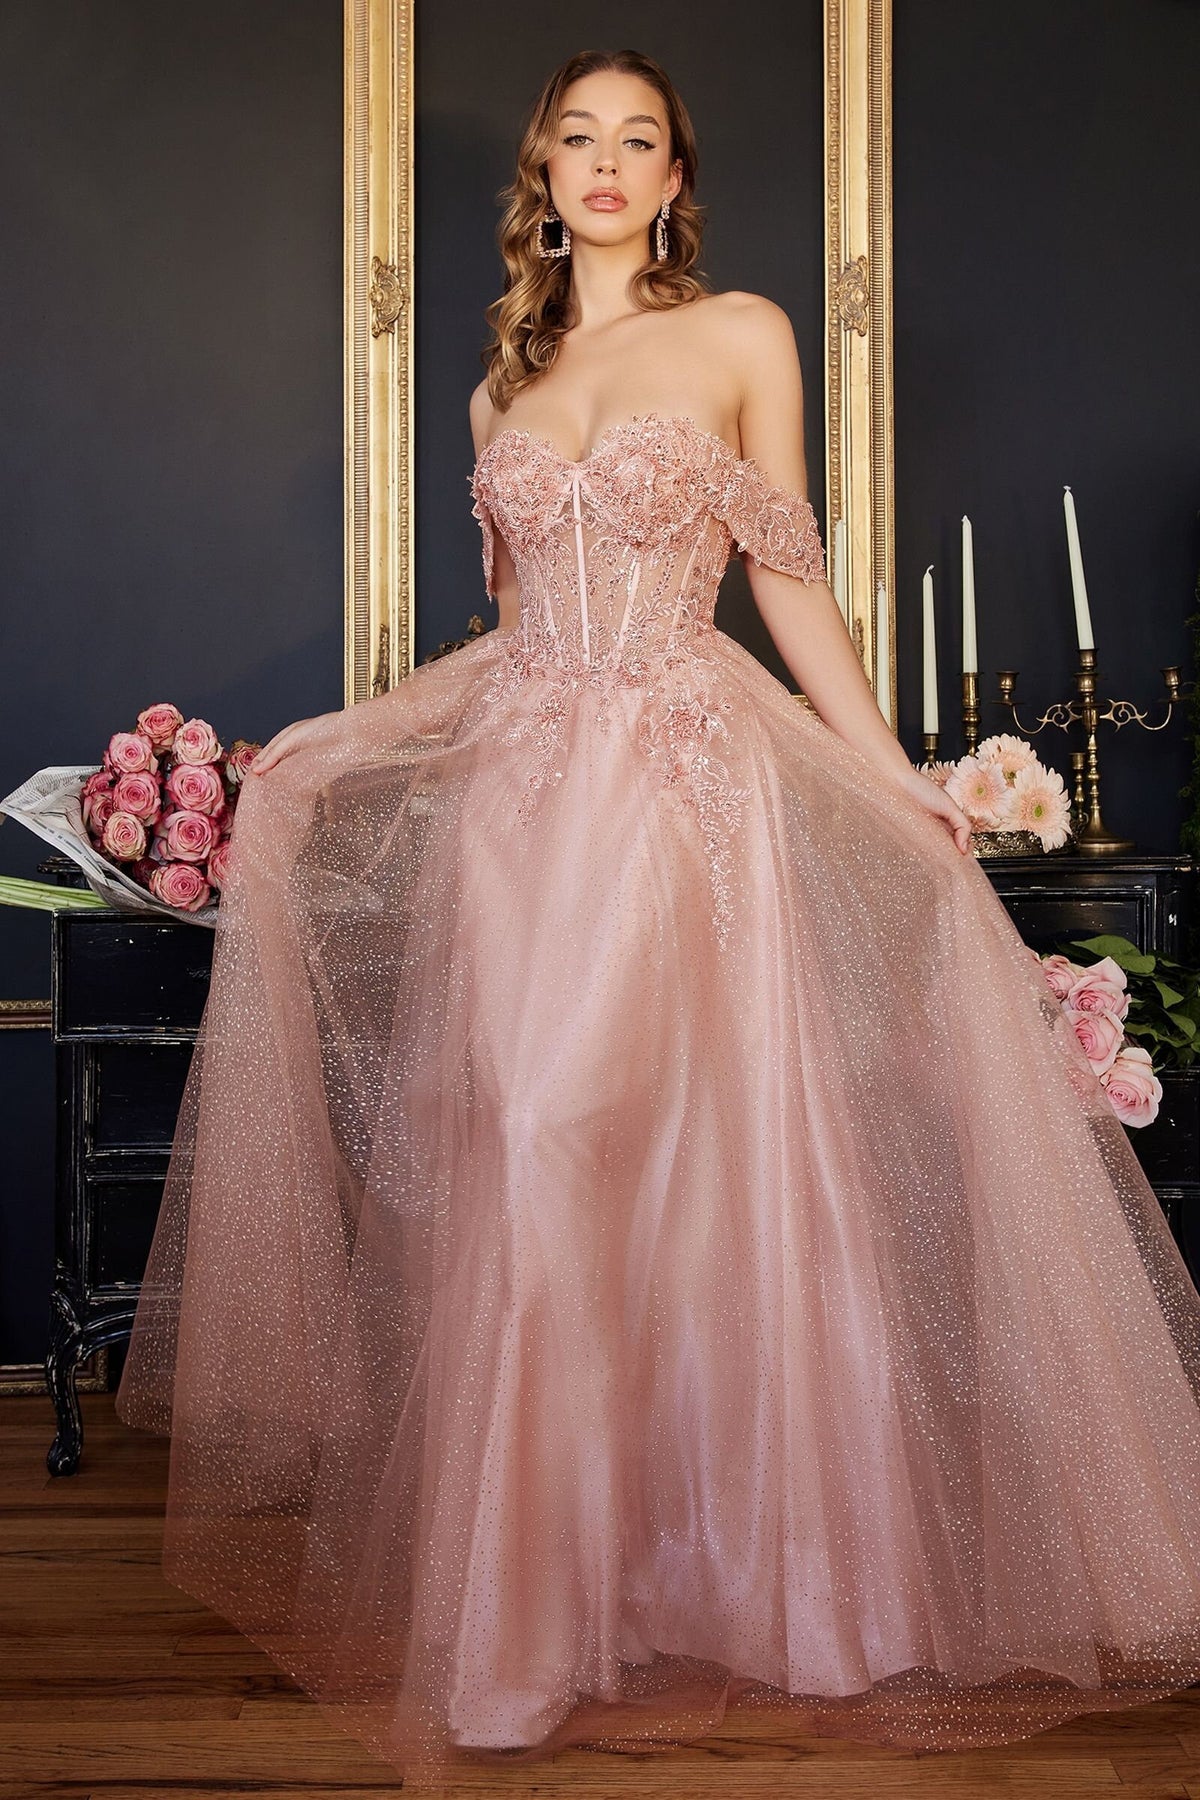 Classic Sweetheart Neckline Off the Shoulder Bustier Wedding Dress Lace Corset Formal Gown Bridal Style Sparkle Skirt Romantic Design Aline